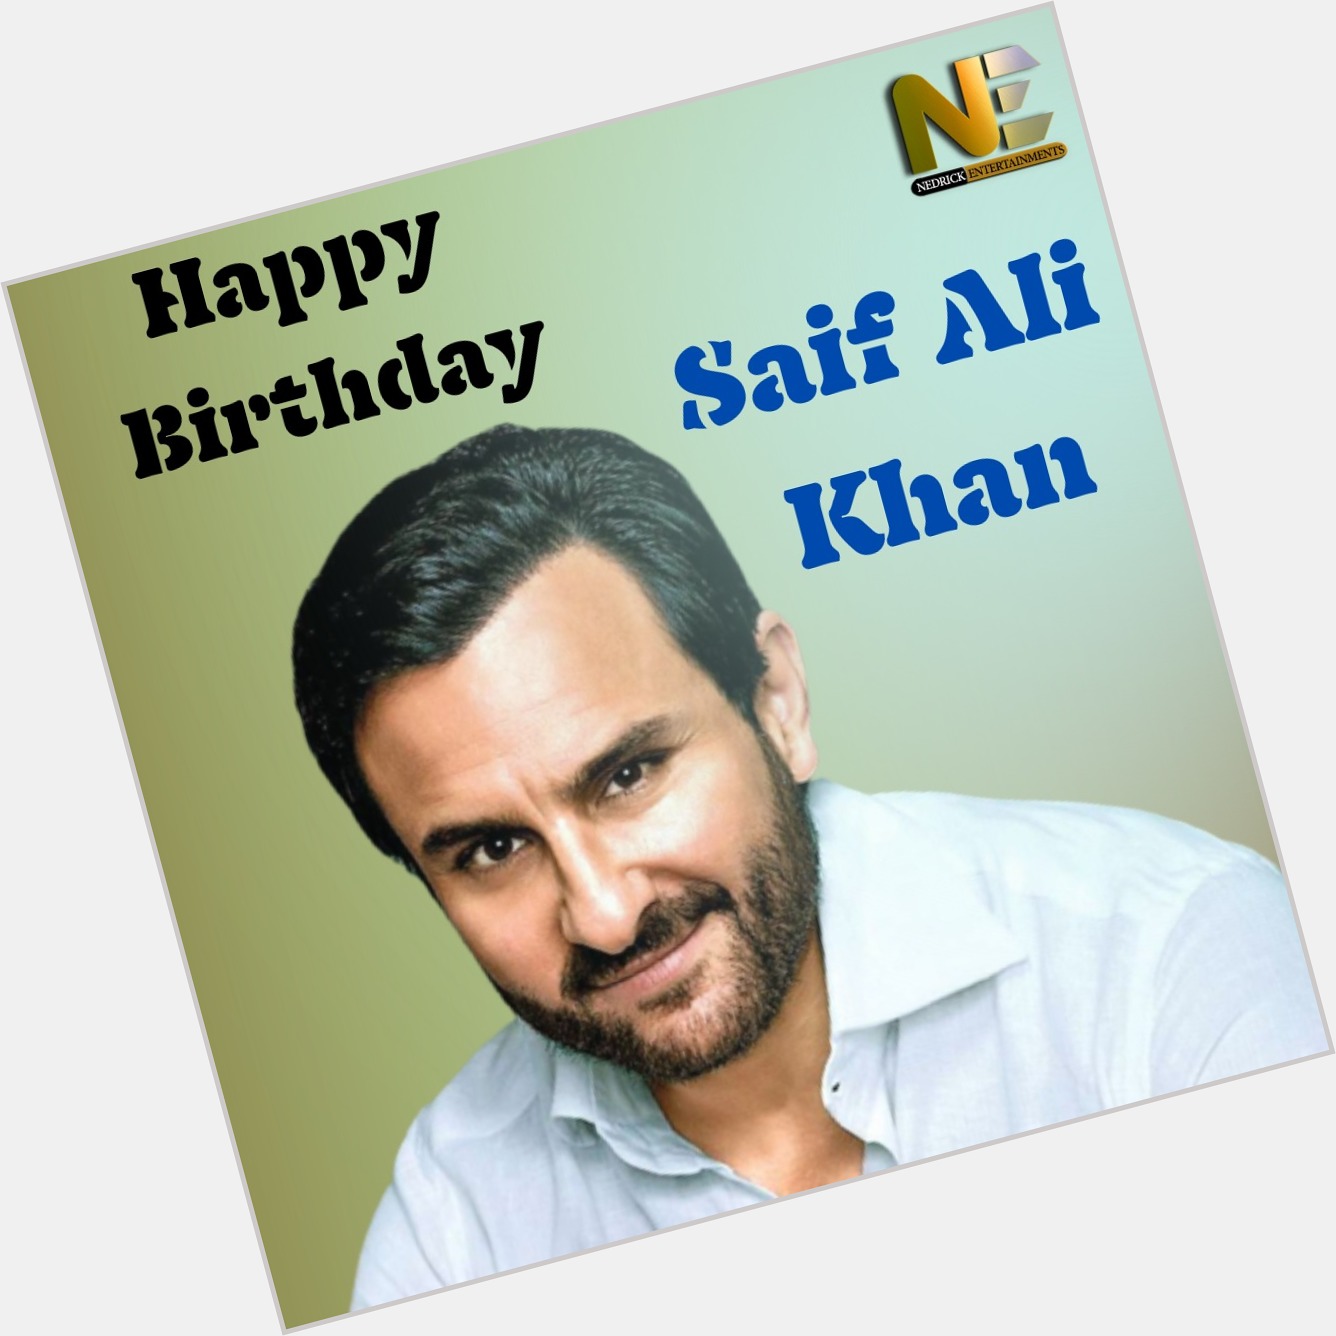 Wishing you a very Happy Birthday Saif Ali Khan!    